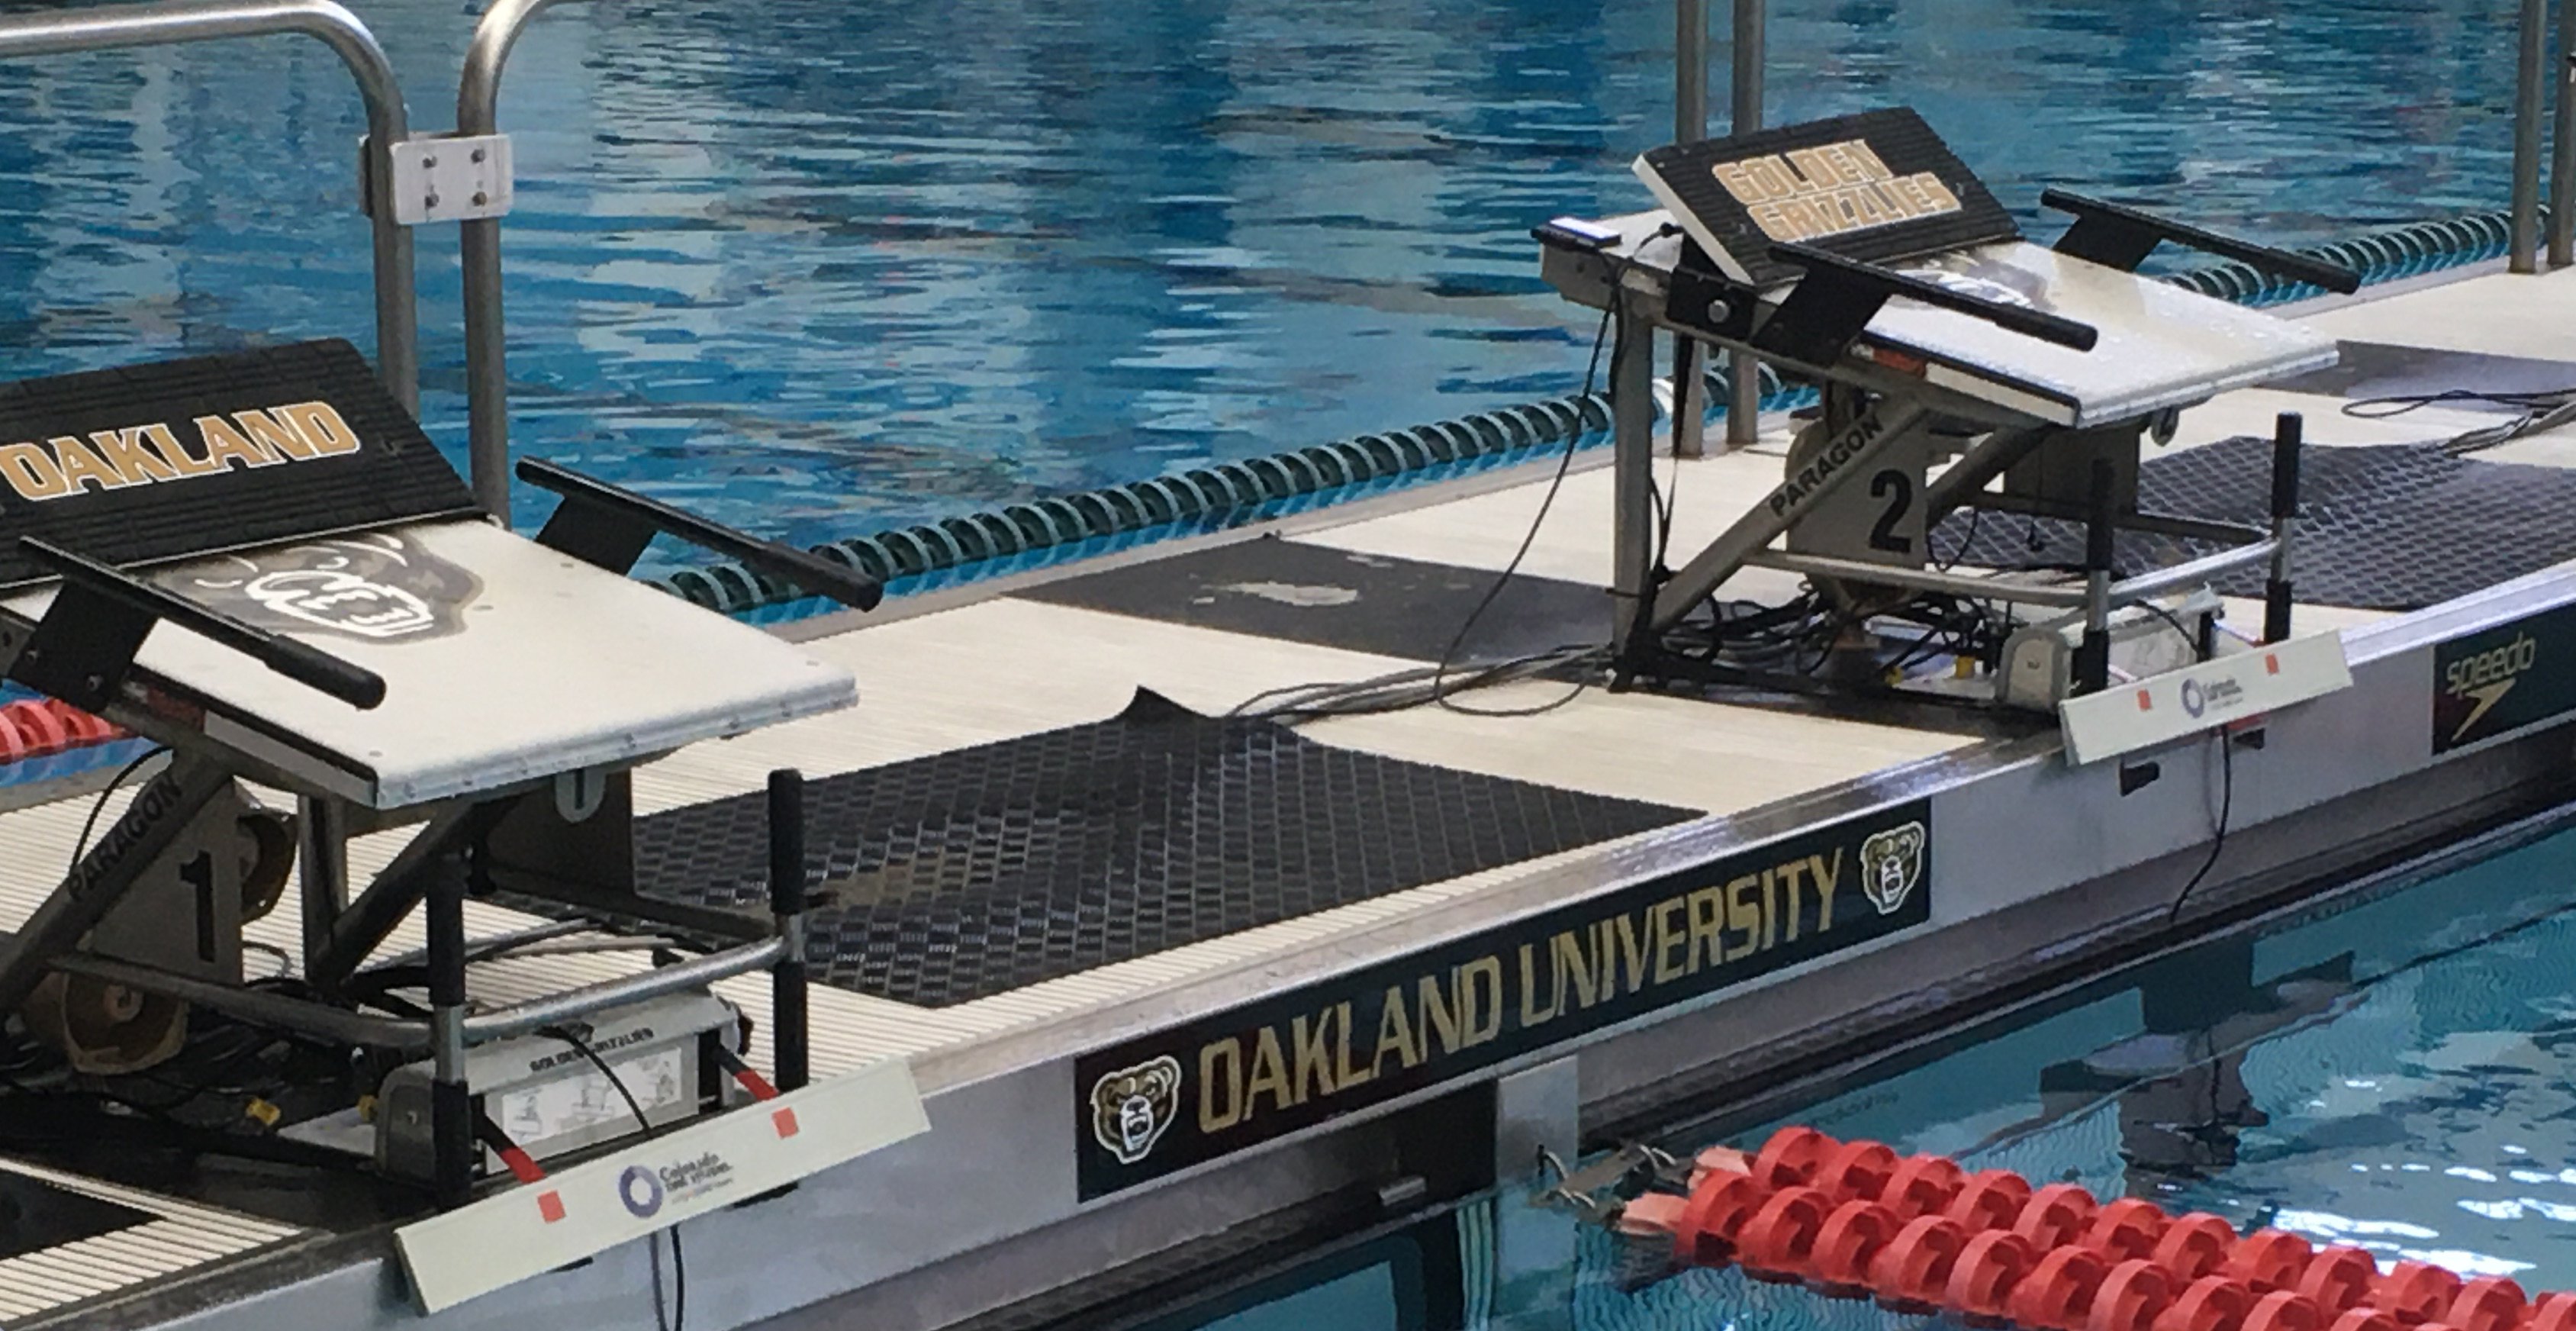 backstroke start device at oakland university in michigan